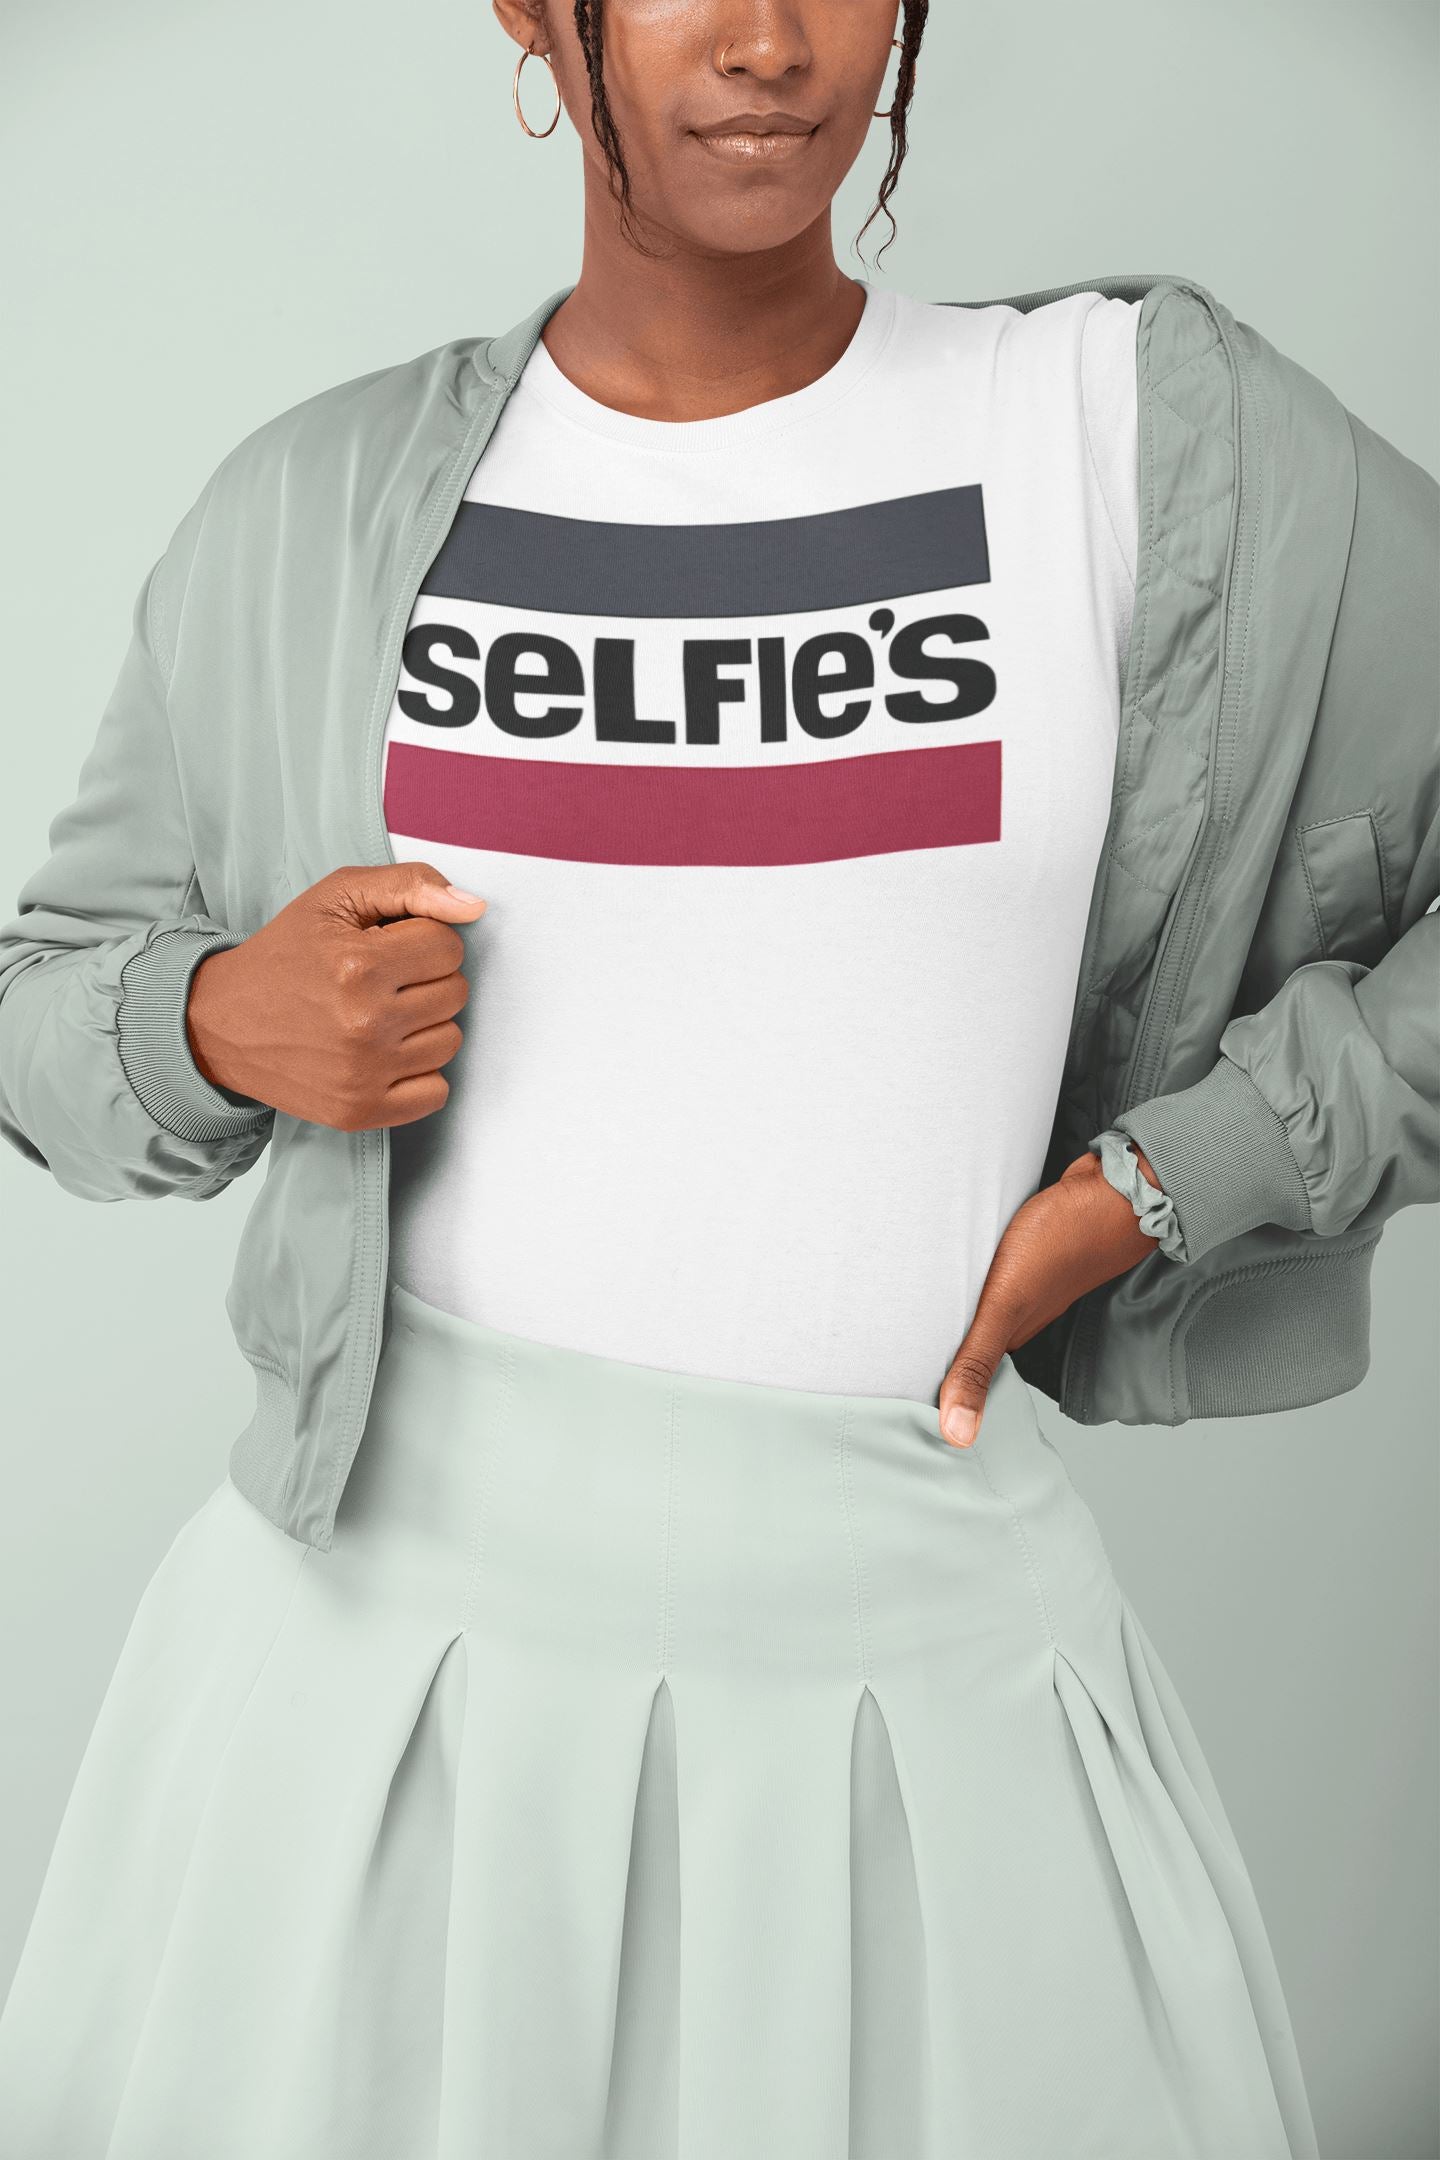 Selfie's Supreme White T Shirt for Men and Women freeshipping